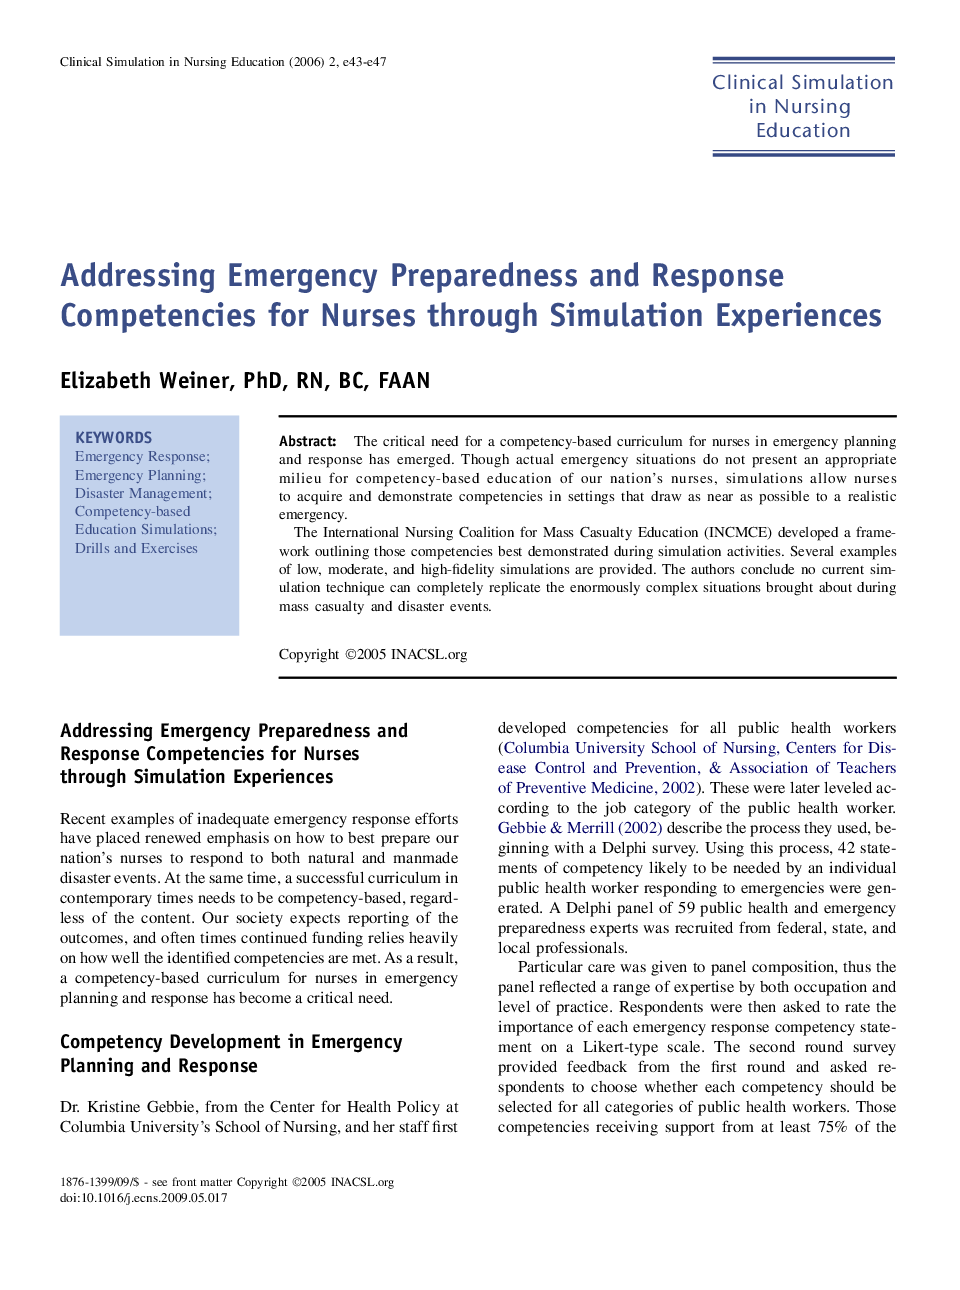 Addressing Emergency Preparedness and Response Competencies for Nurses through Simulation Experiences